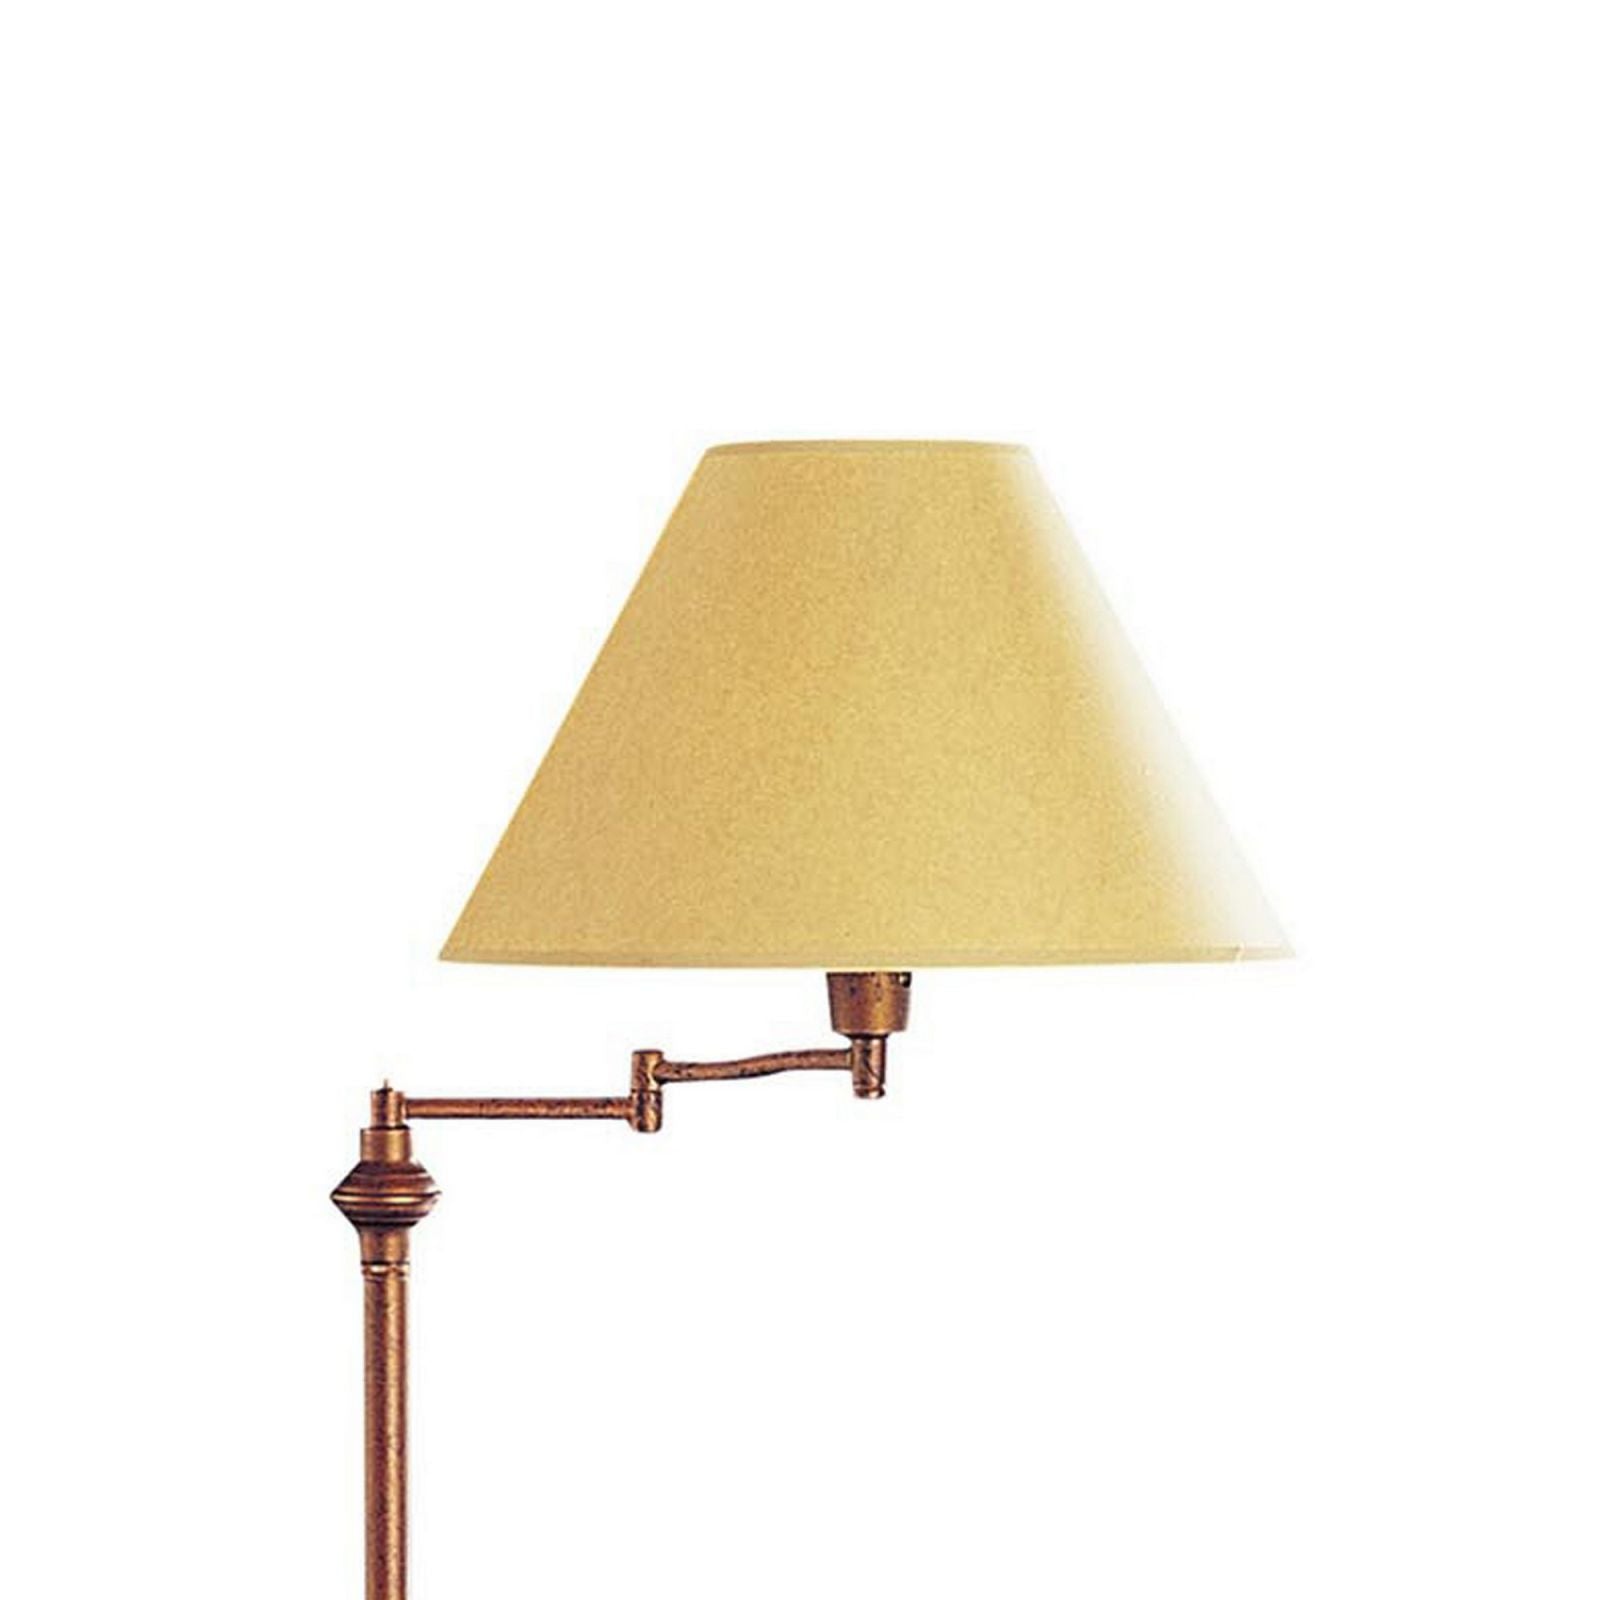 150 Watt Metal Floor Lamp With Swing Arm And Fabric Conical Shade, Bronze By Benzara